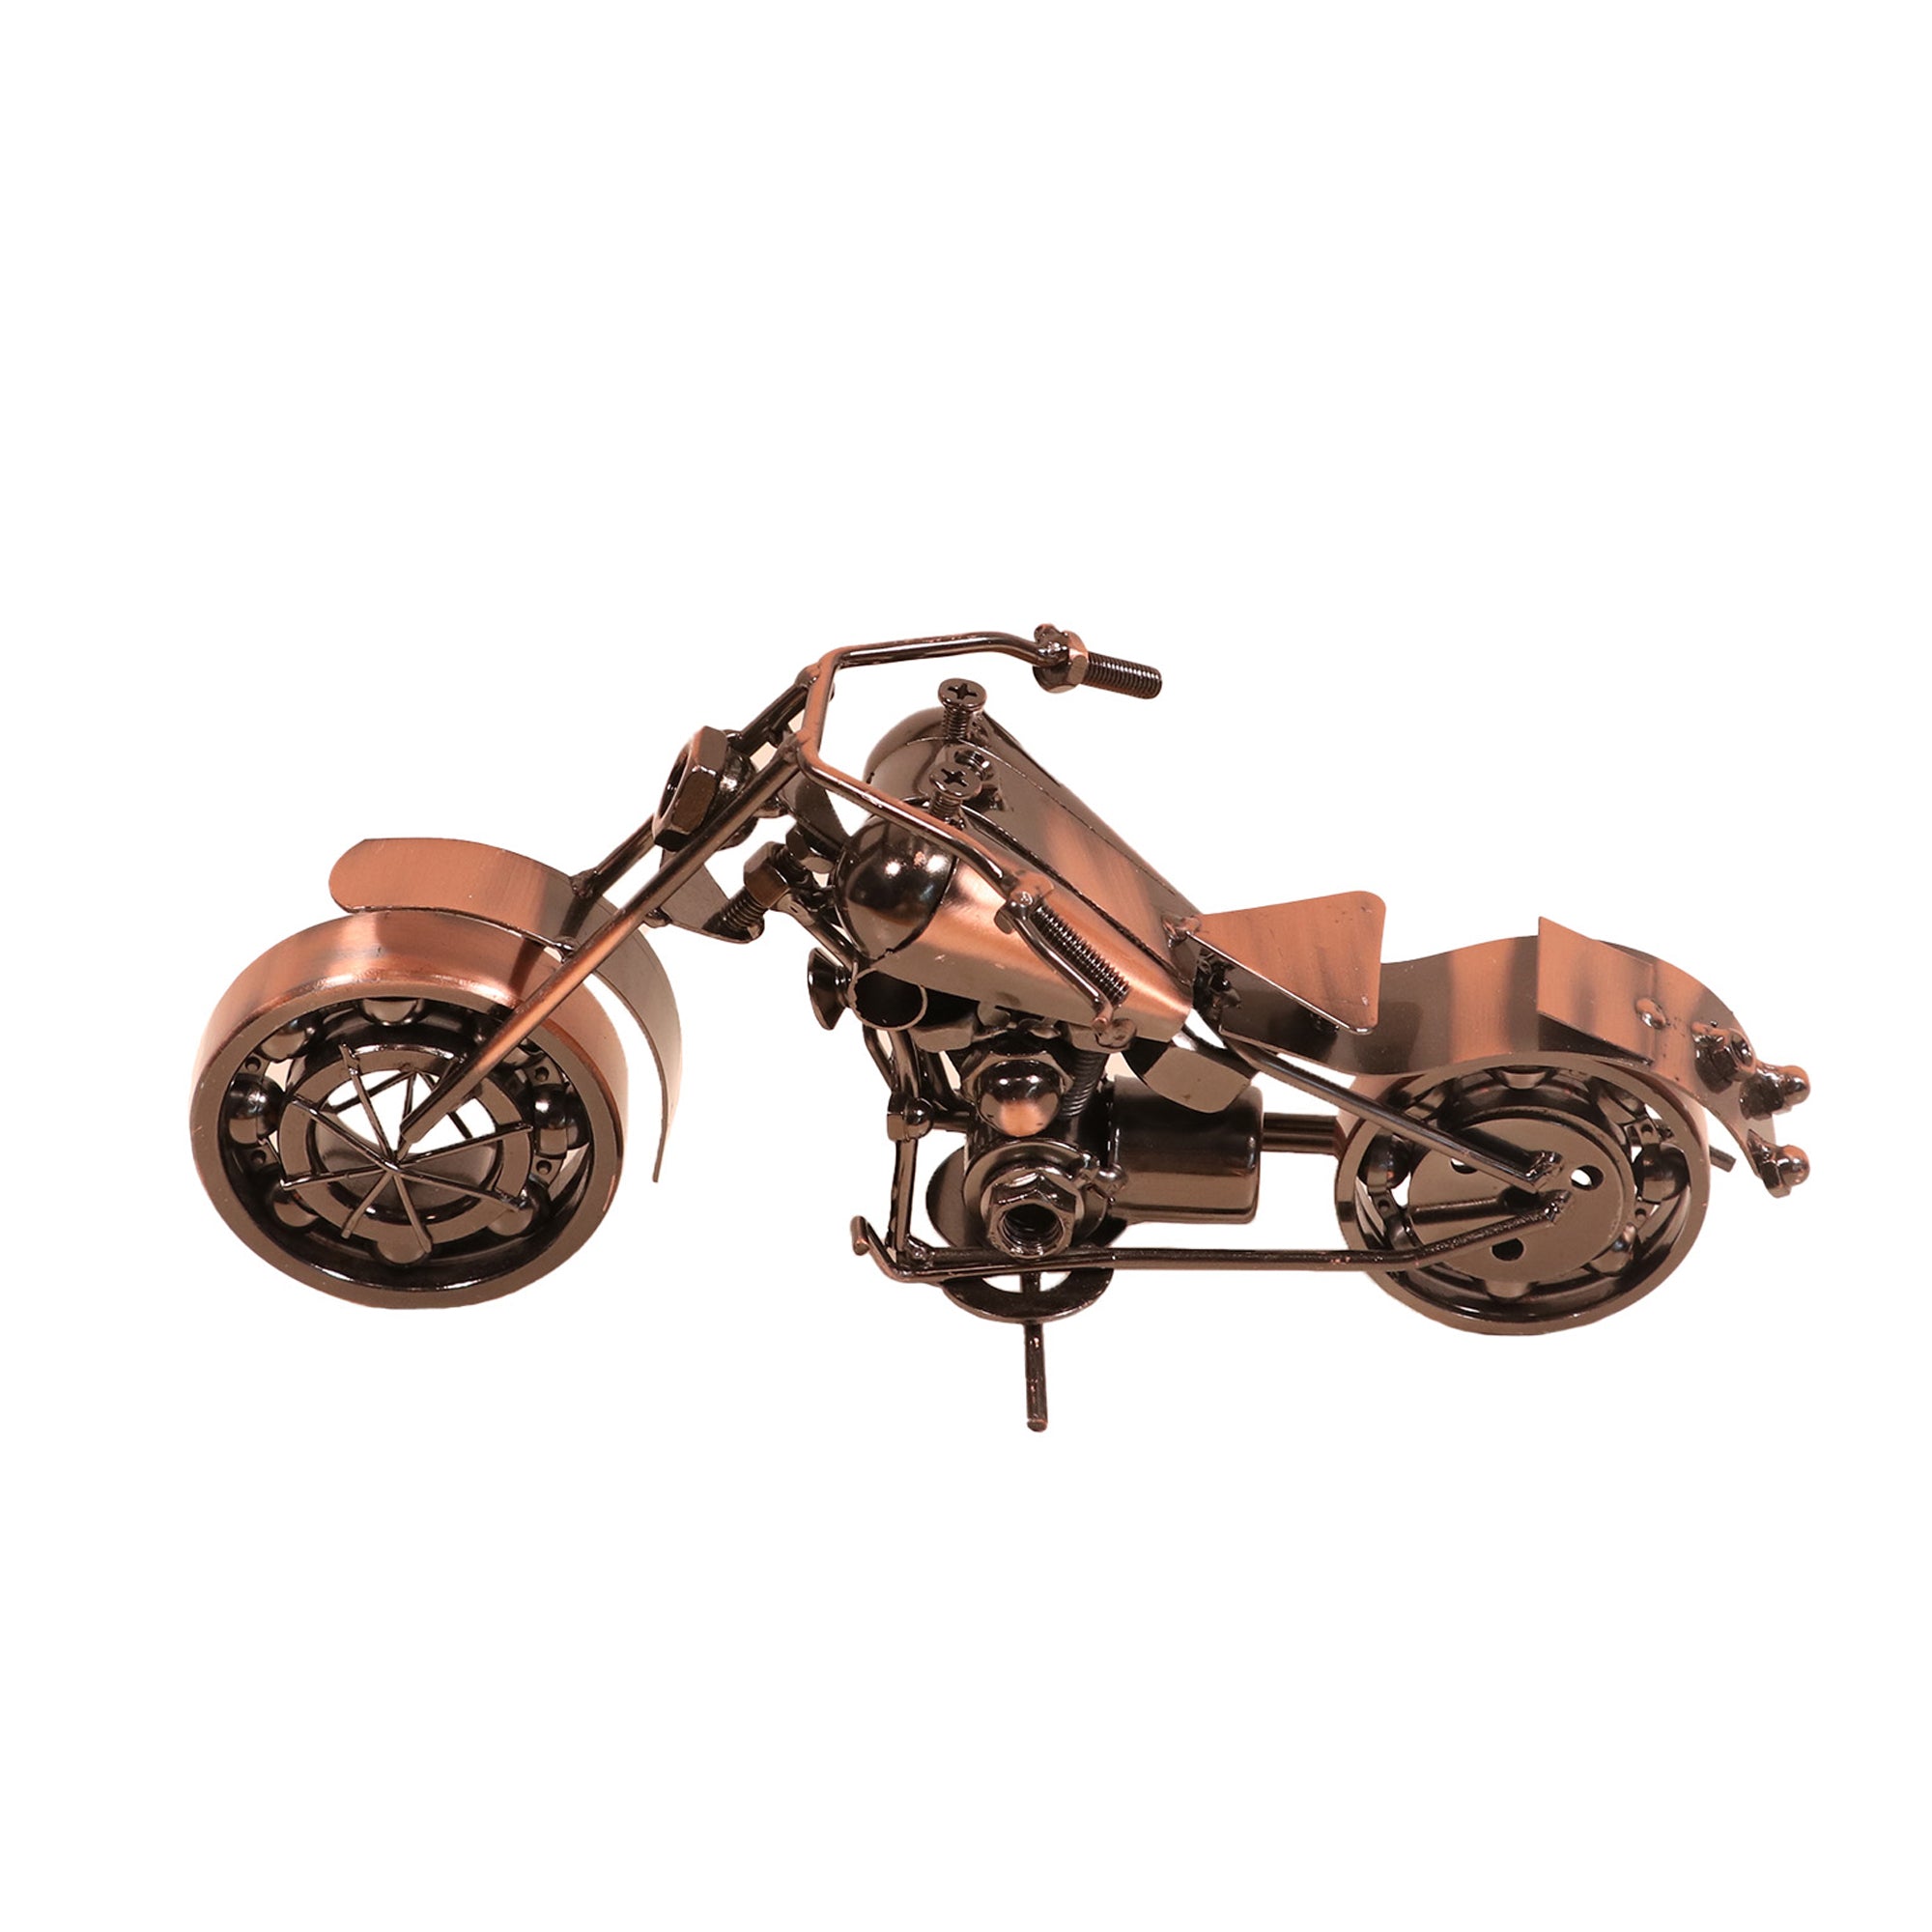 Flaming Metal Bike Vehicle figurine